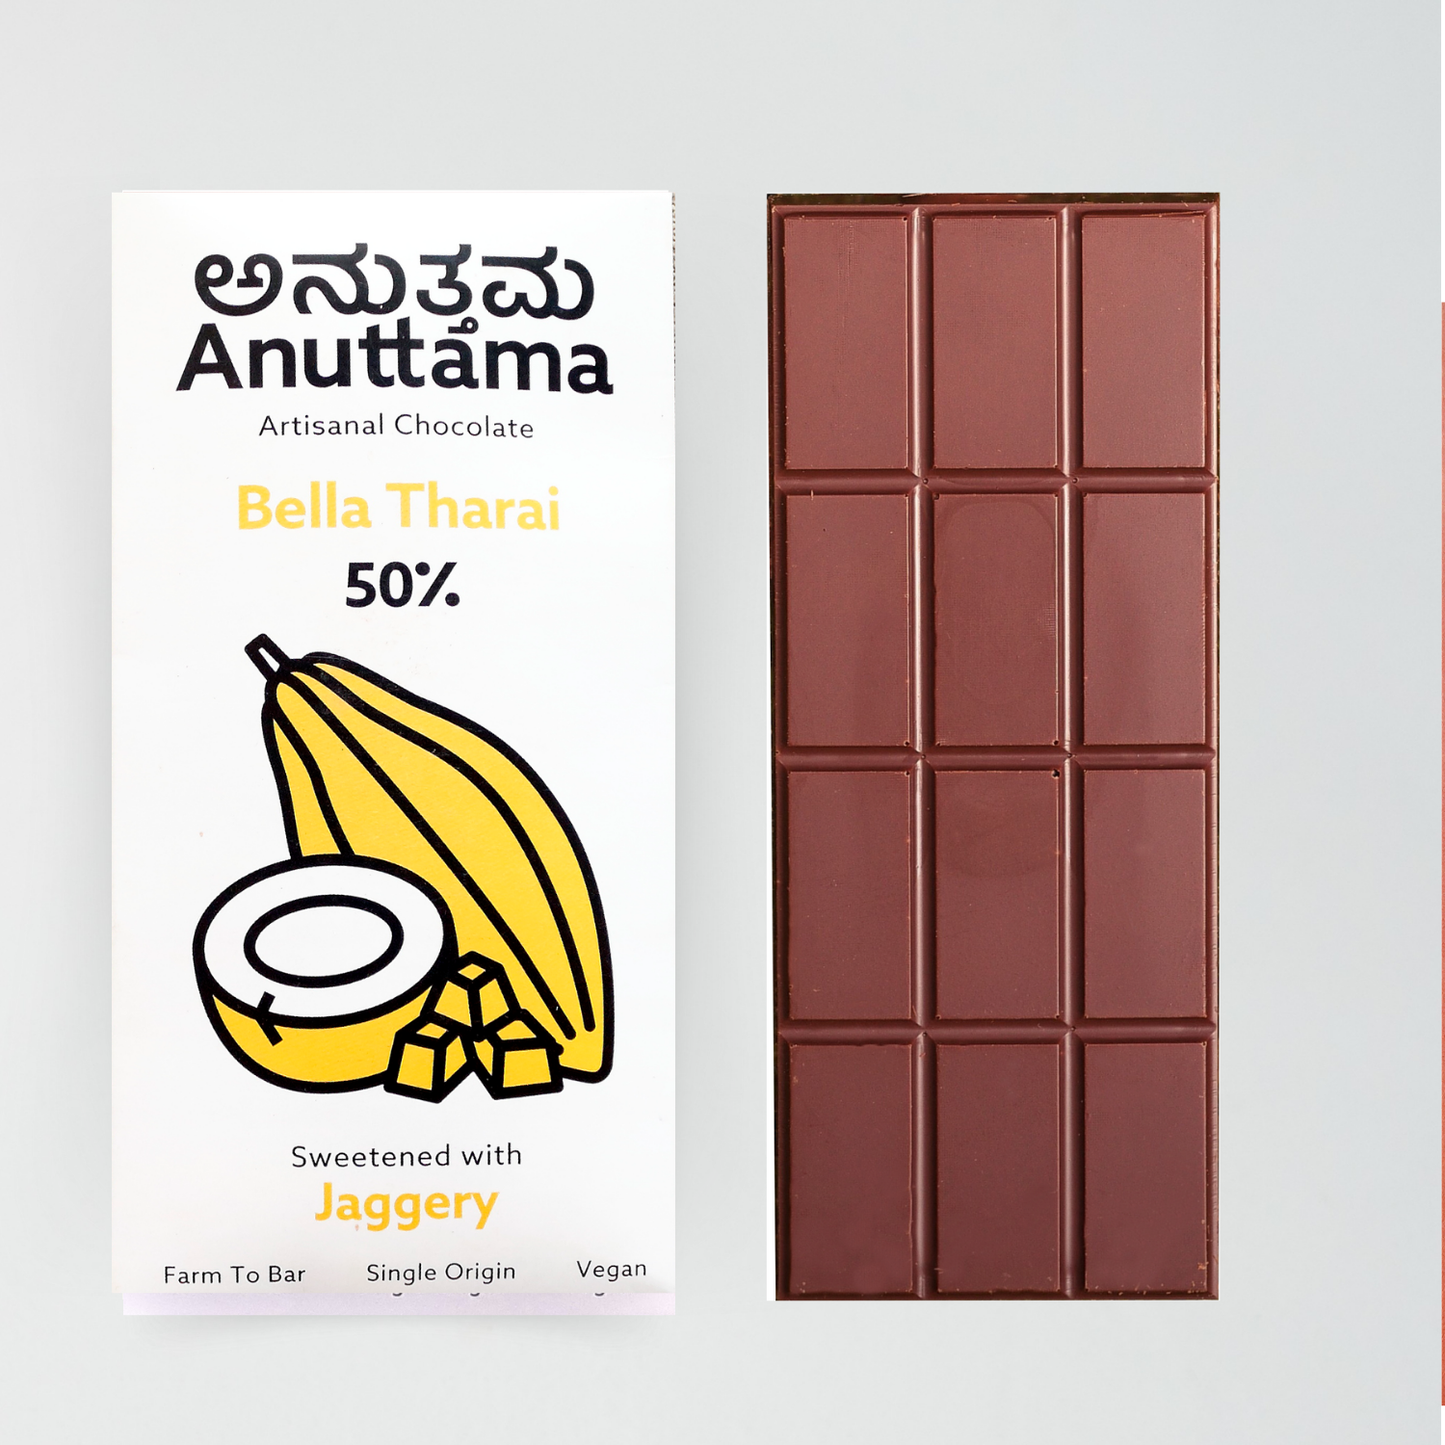 ANUTTAMA Dark Chocolate | Combo of 50% Bella Tharai Cocoa & 55% Cocoa  | Coconut Sugar  | 50gm, Pack of 2